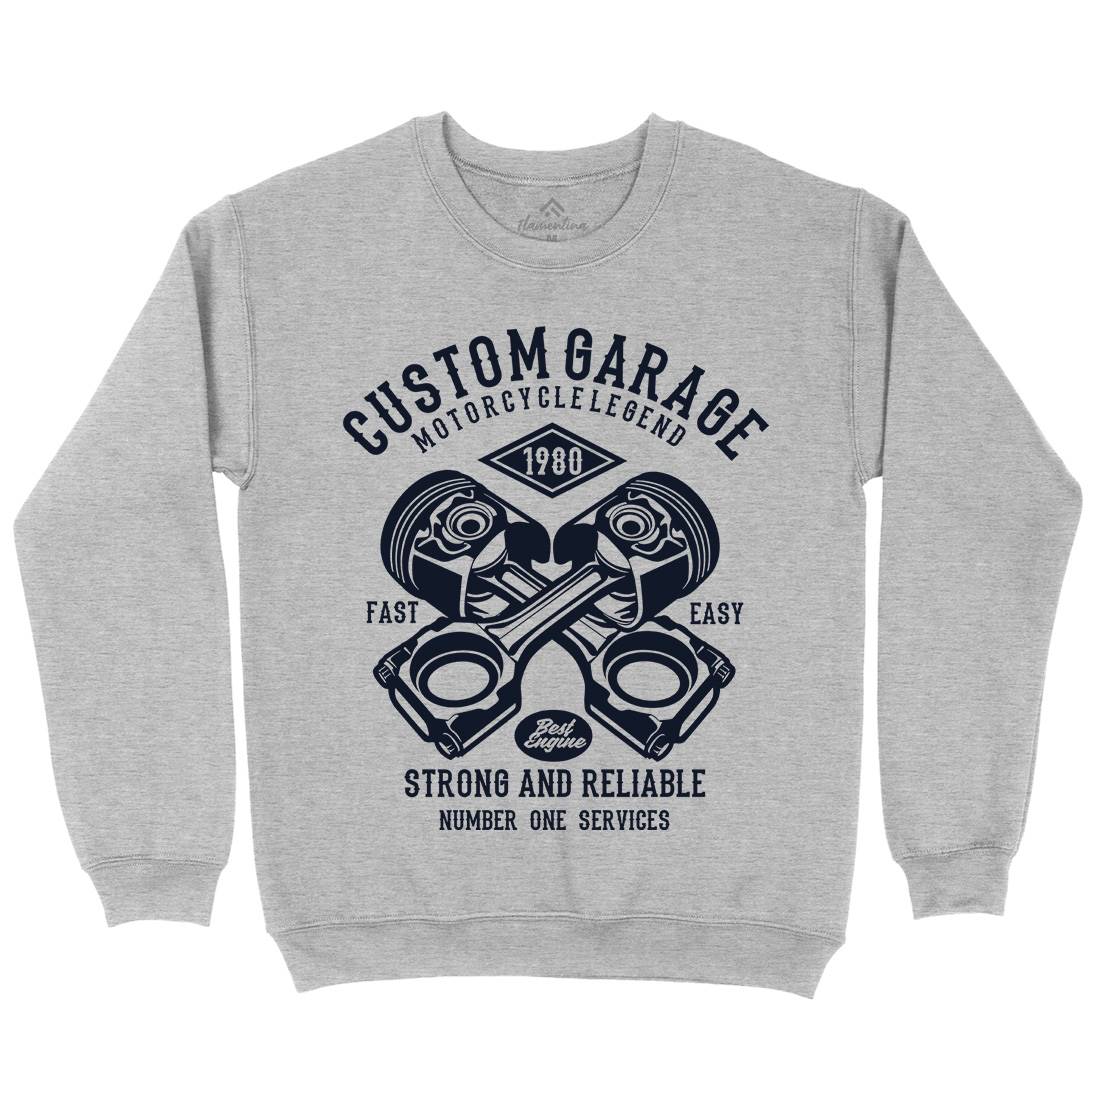 Custom Garage Mens Crew Neck Sweatshirt Cars B198